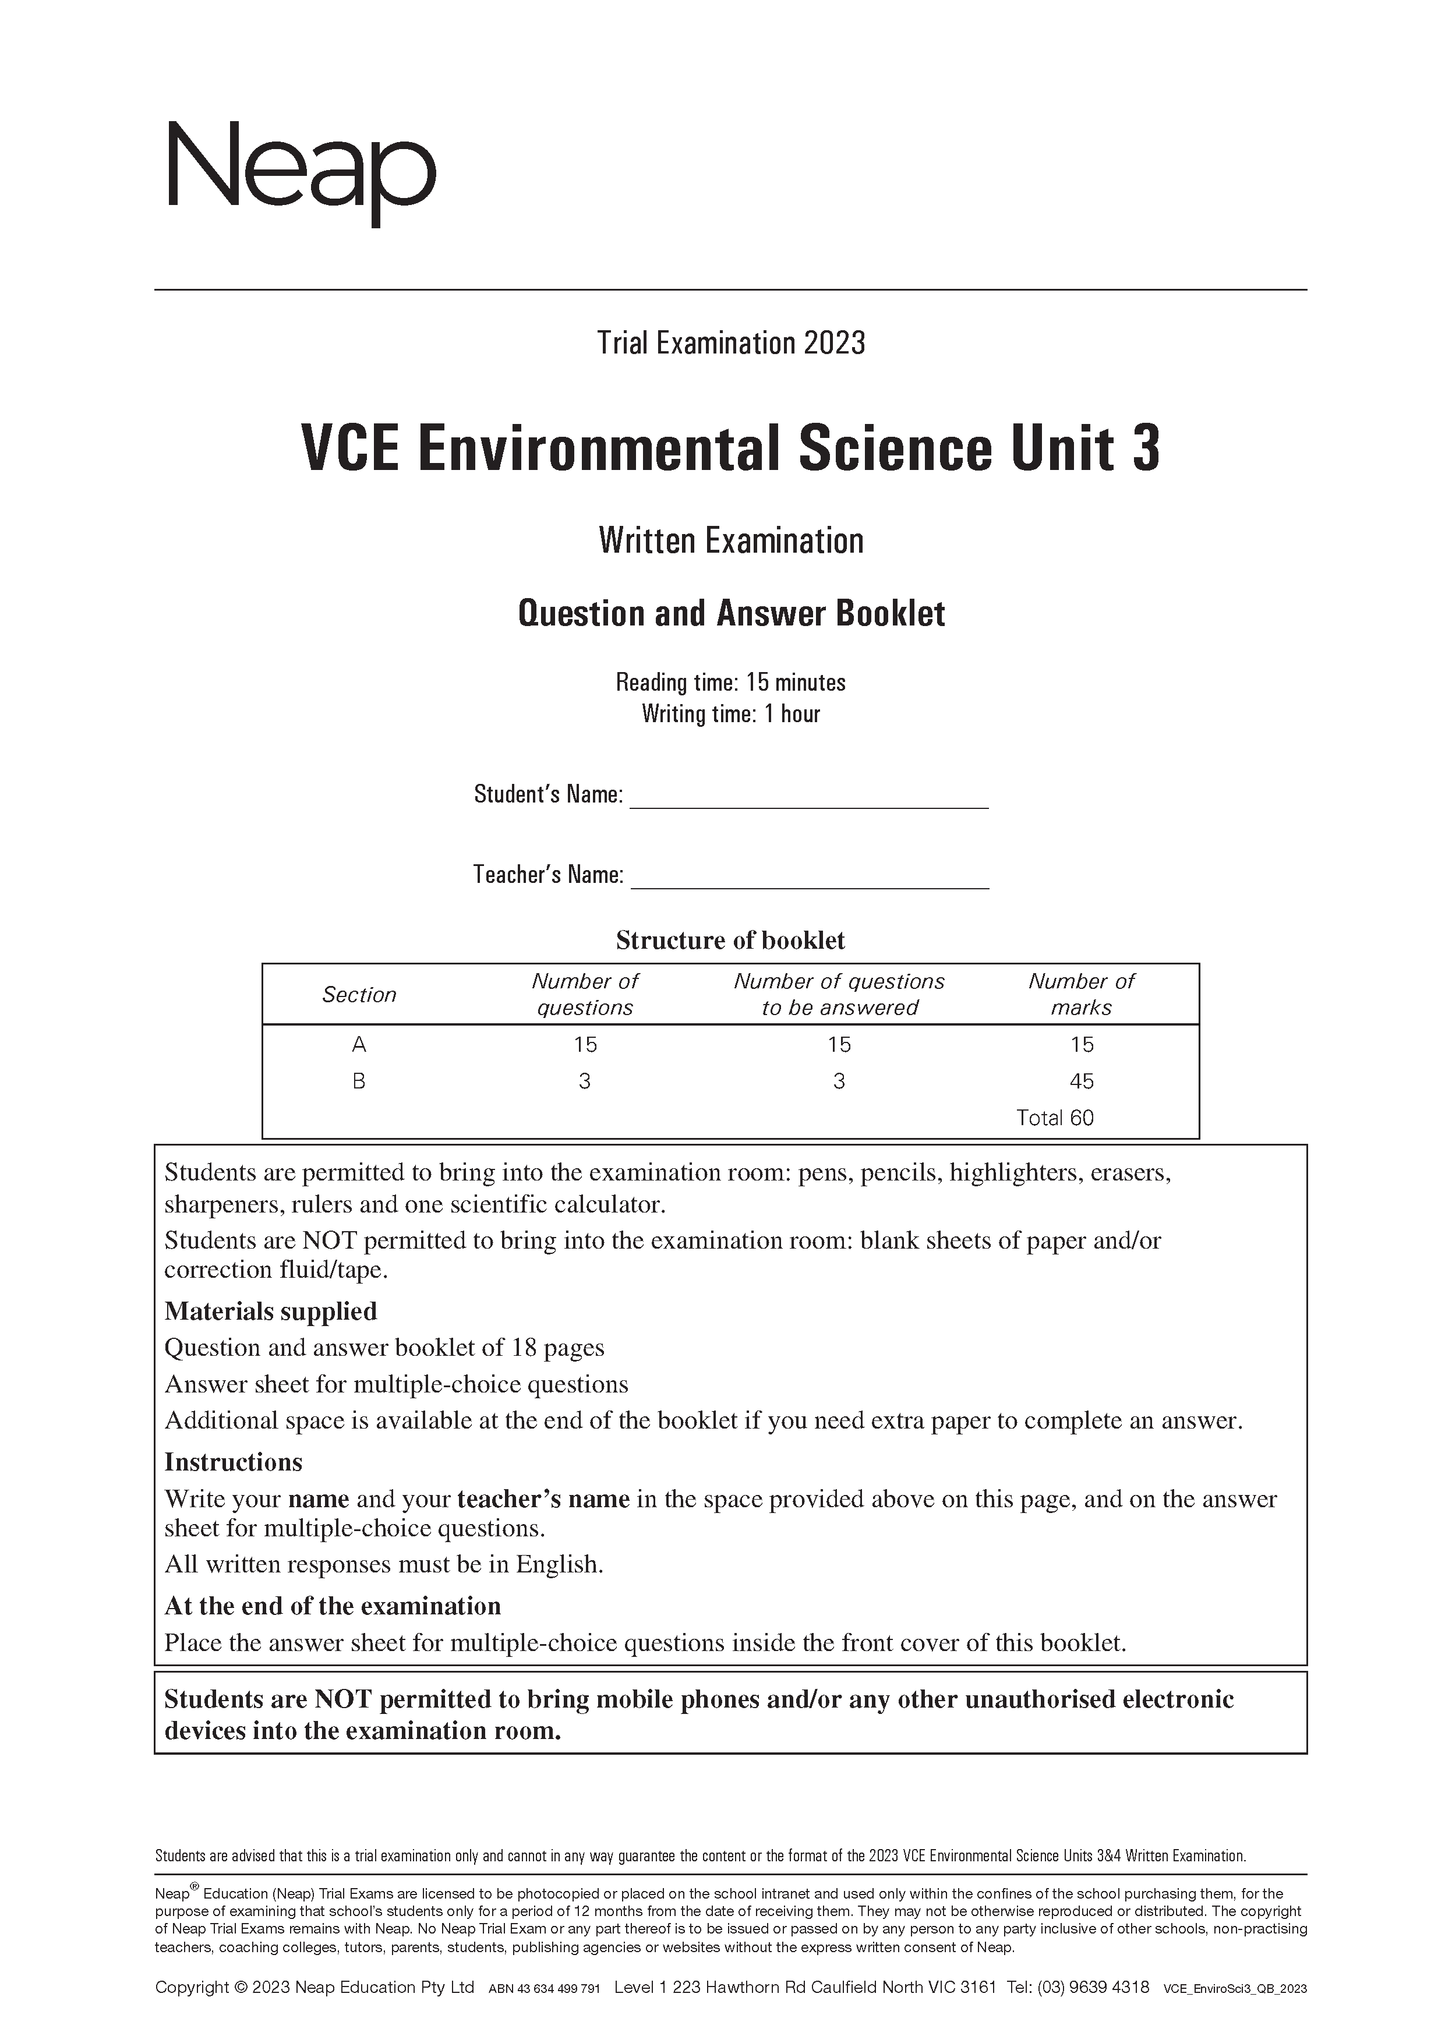 Neap Trial Exam: 2023 VCE Environmental Science Unit 3